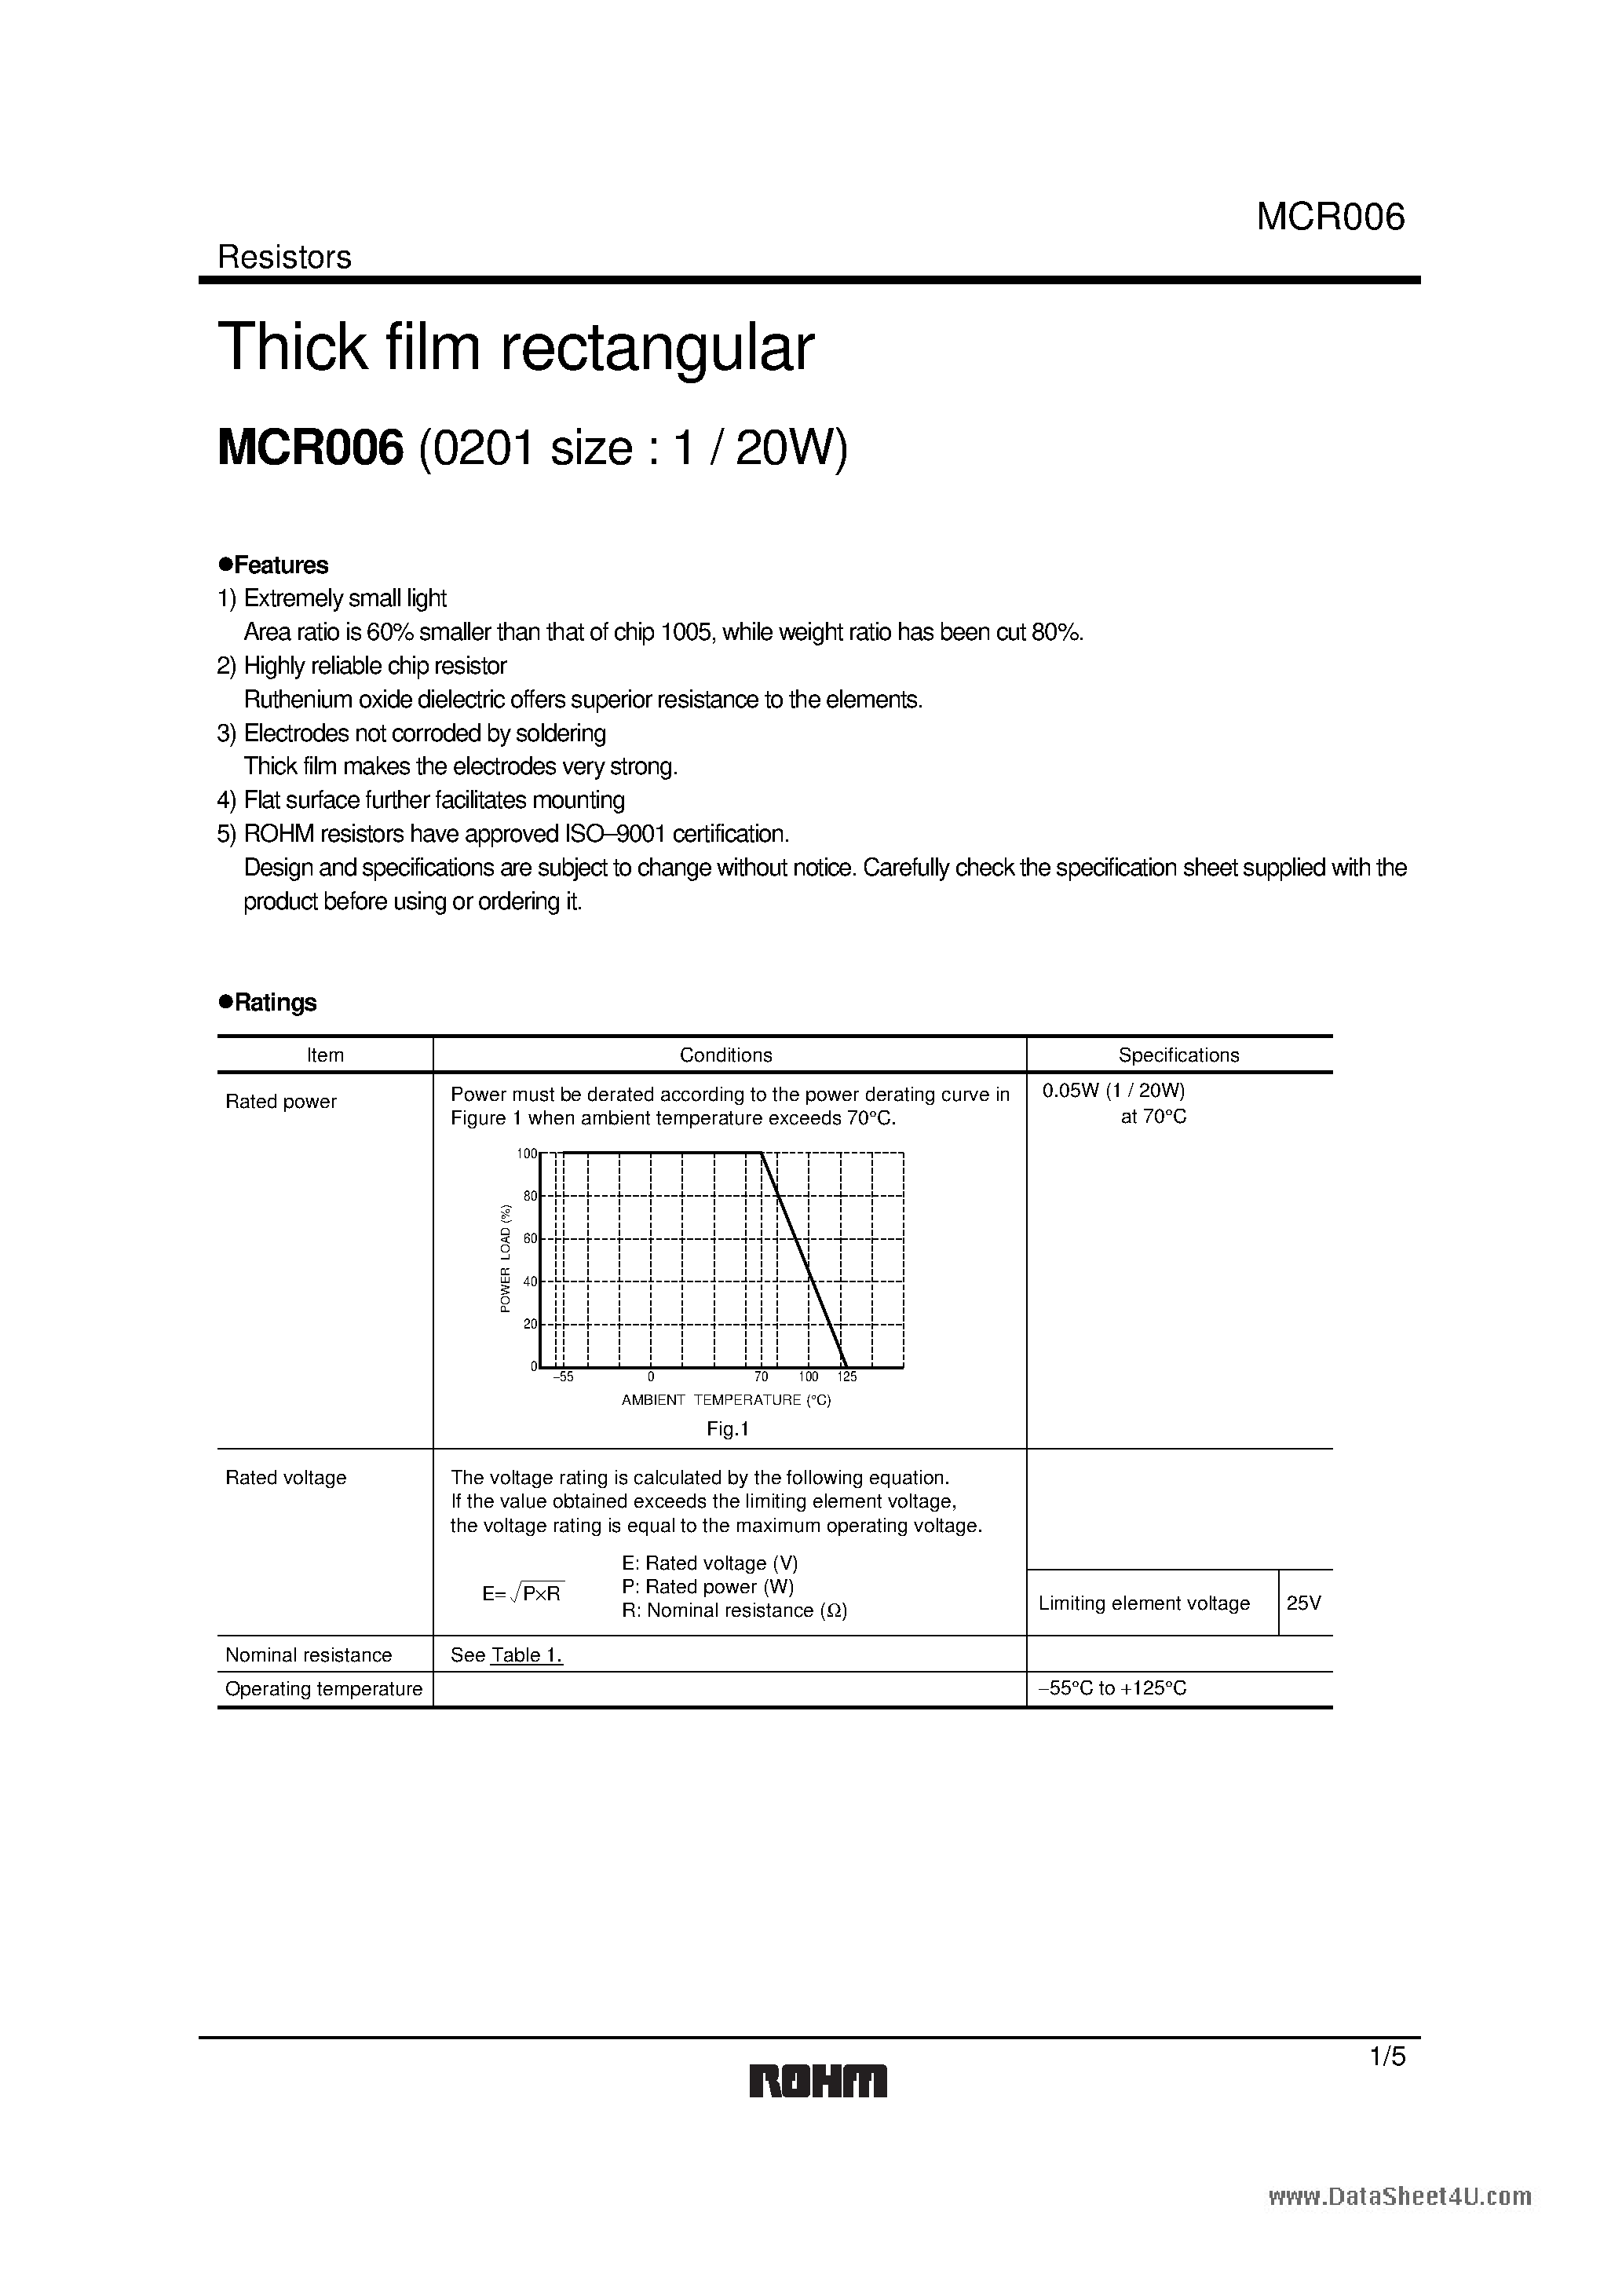 Даташит MCR006 - Thick film rectangular страница 1